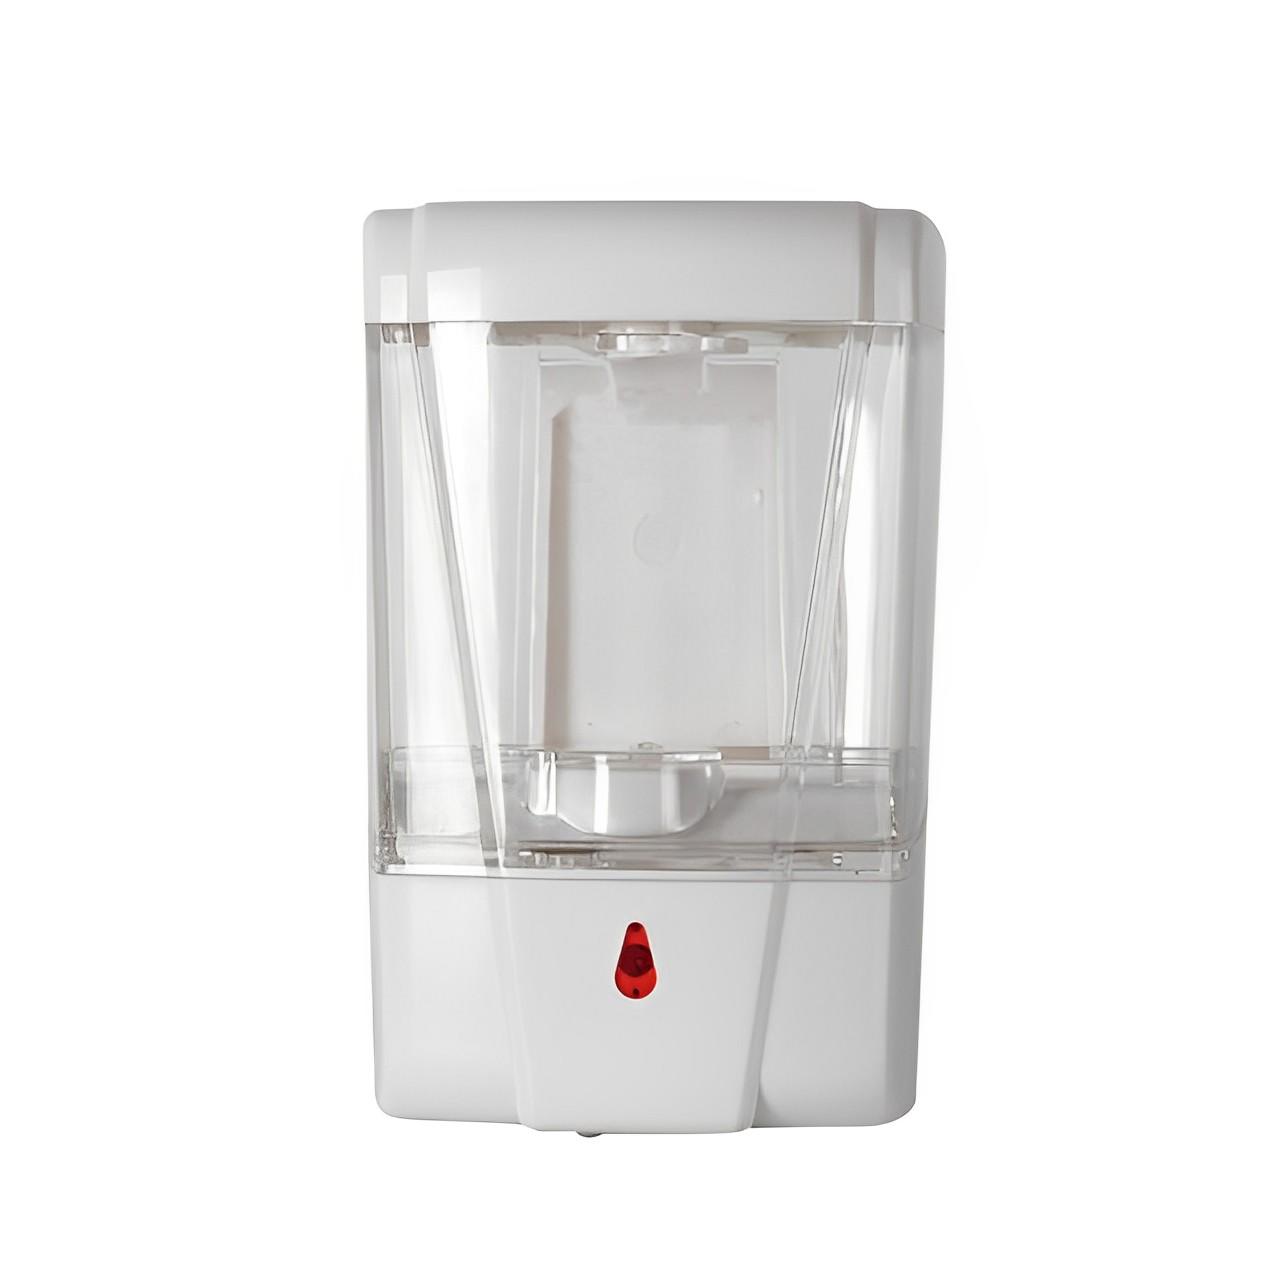 OJ-F1309J-L Automatic Visual Transparent Soap Dispenser Large Capacity 23.6oz(700ML) with Gel or Liquid Sensor Soap Dispenser